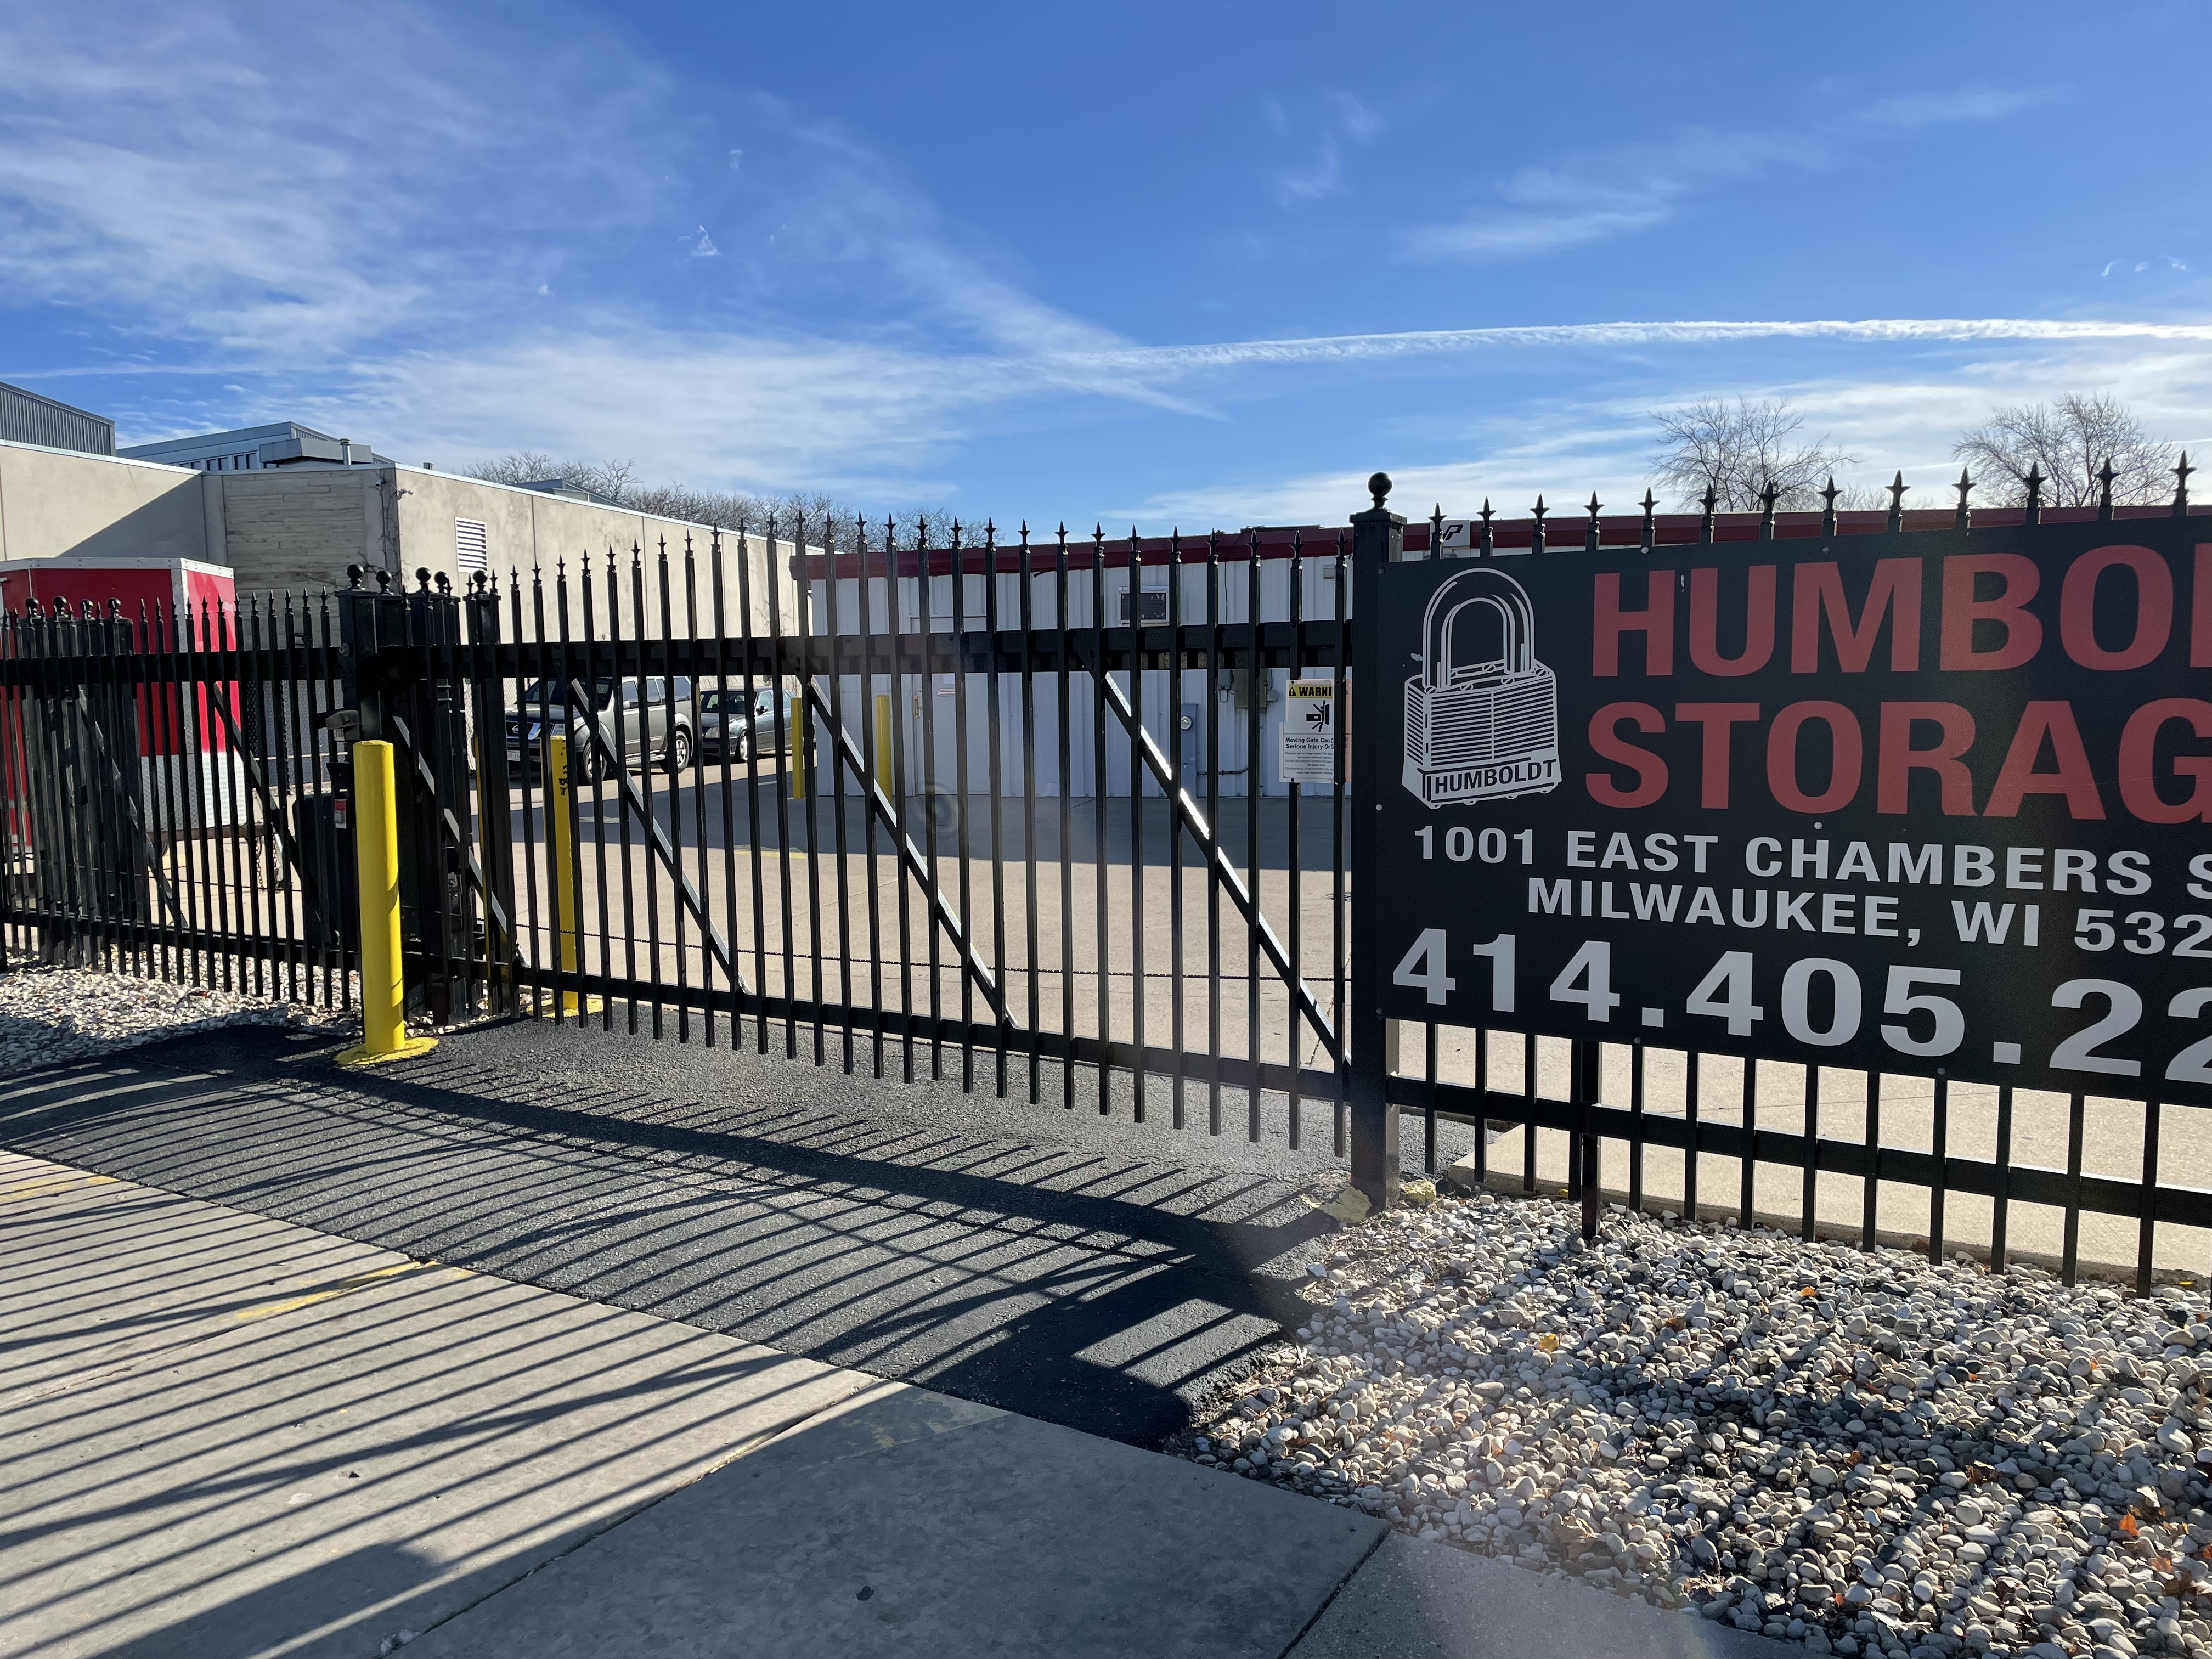 Humbolt Storage Milwaukee, WI